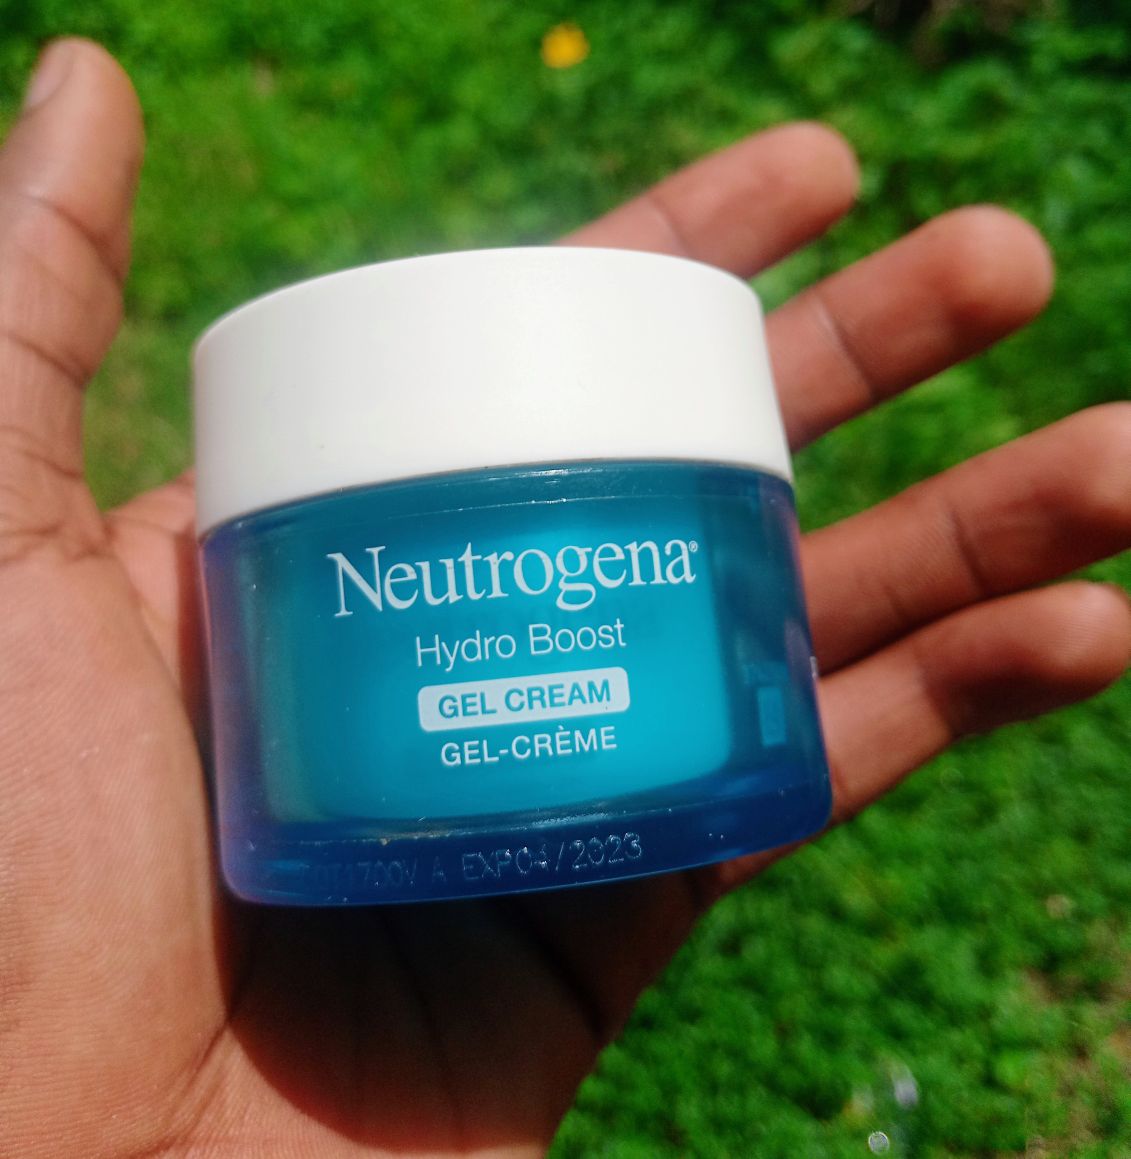 Neutrogena Hydro Boost Gel-Cream review